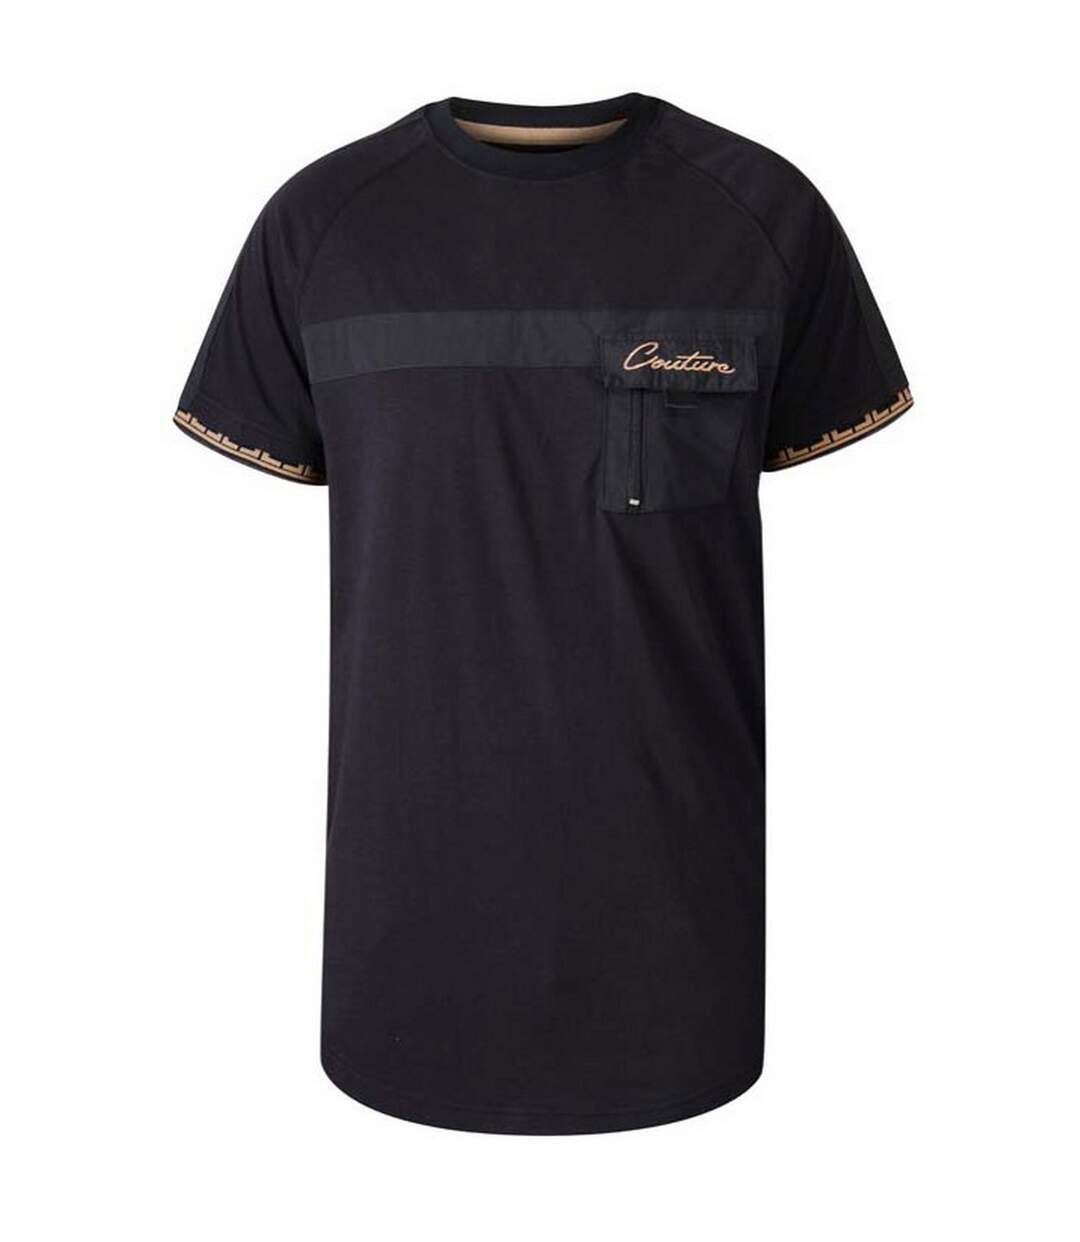 Duke - T-shirt manches courtes THOR - Homme (Noir) - UTDC298